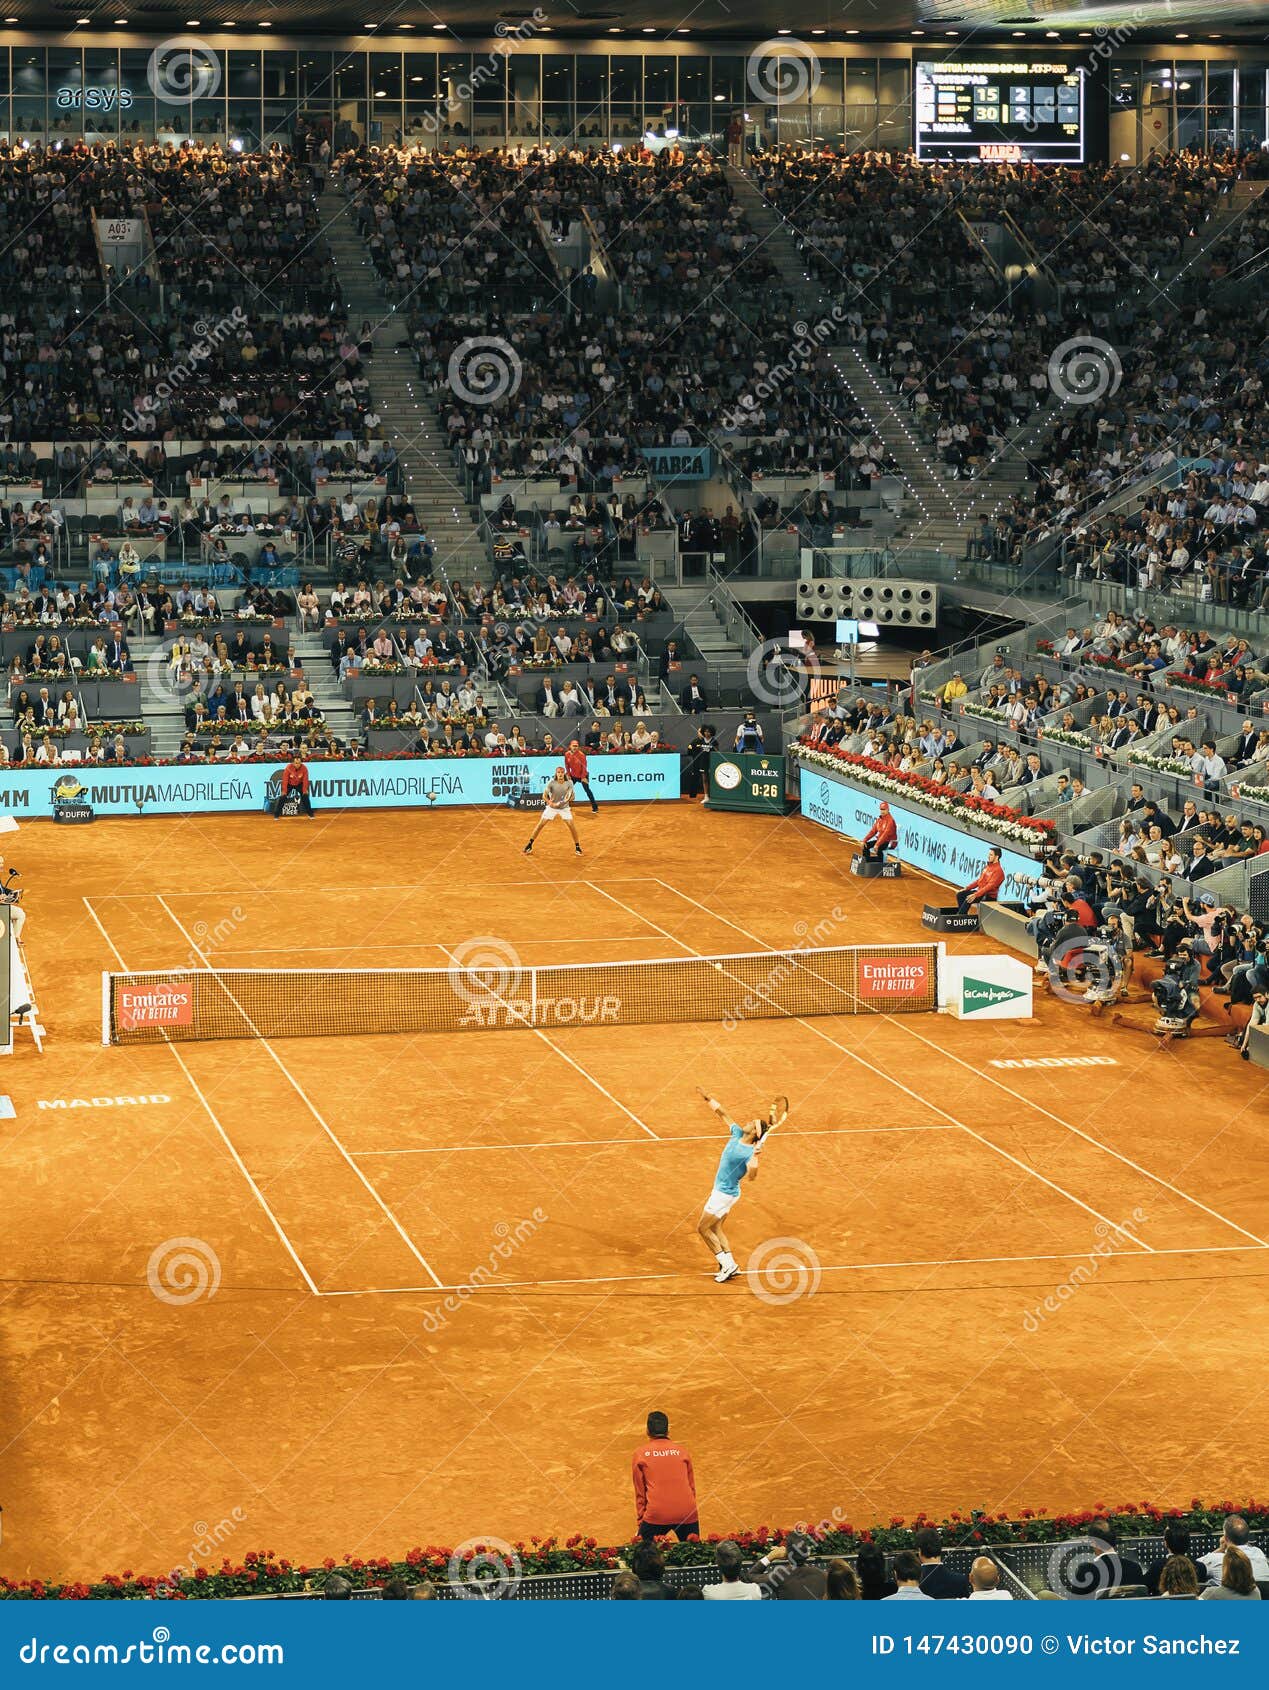 Madrid, Spain; 11 May 2019 the Caja Magica Tennis Center during the 2019 Mutua Madrid Open ATP Premier Mandatory Tennis Editorial Image